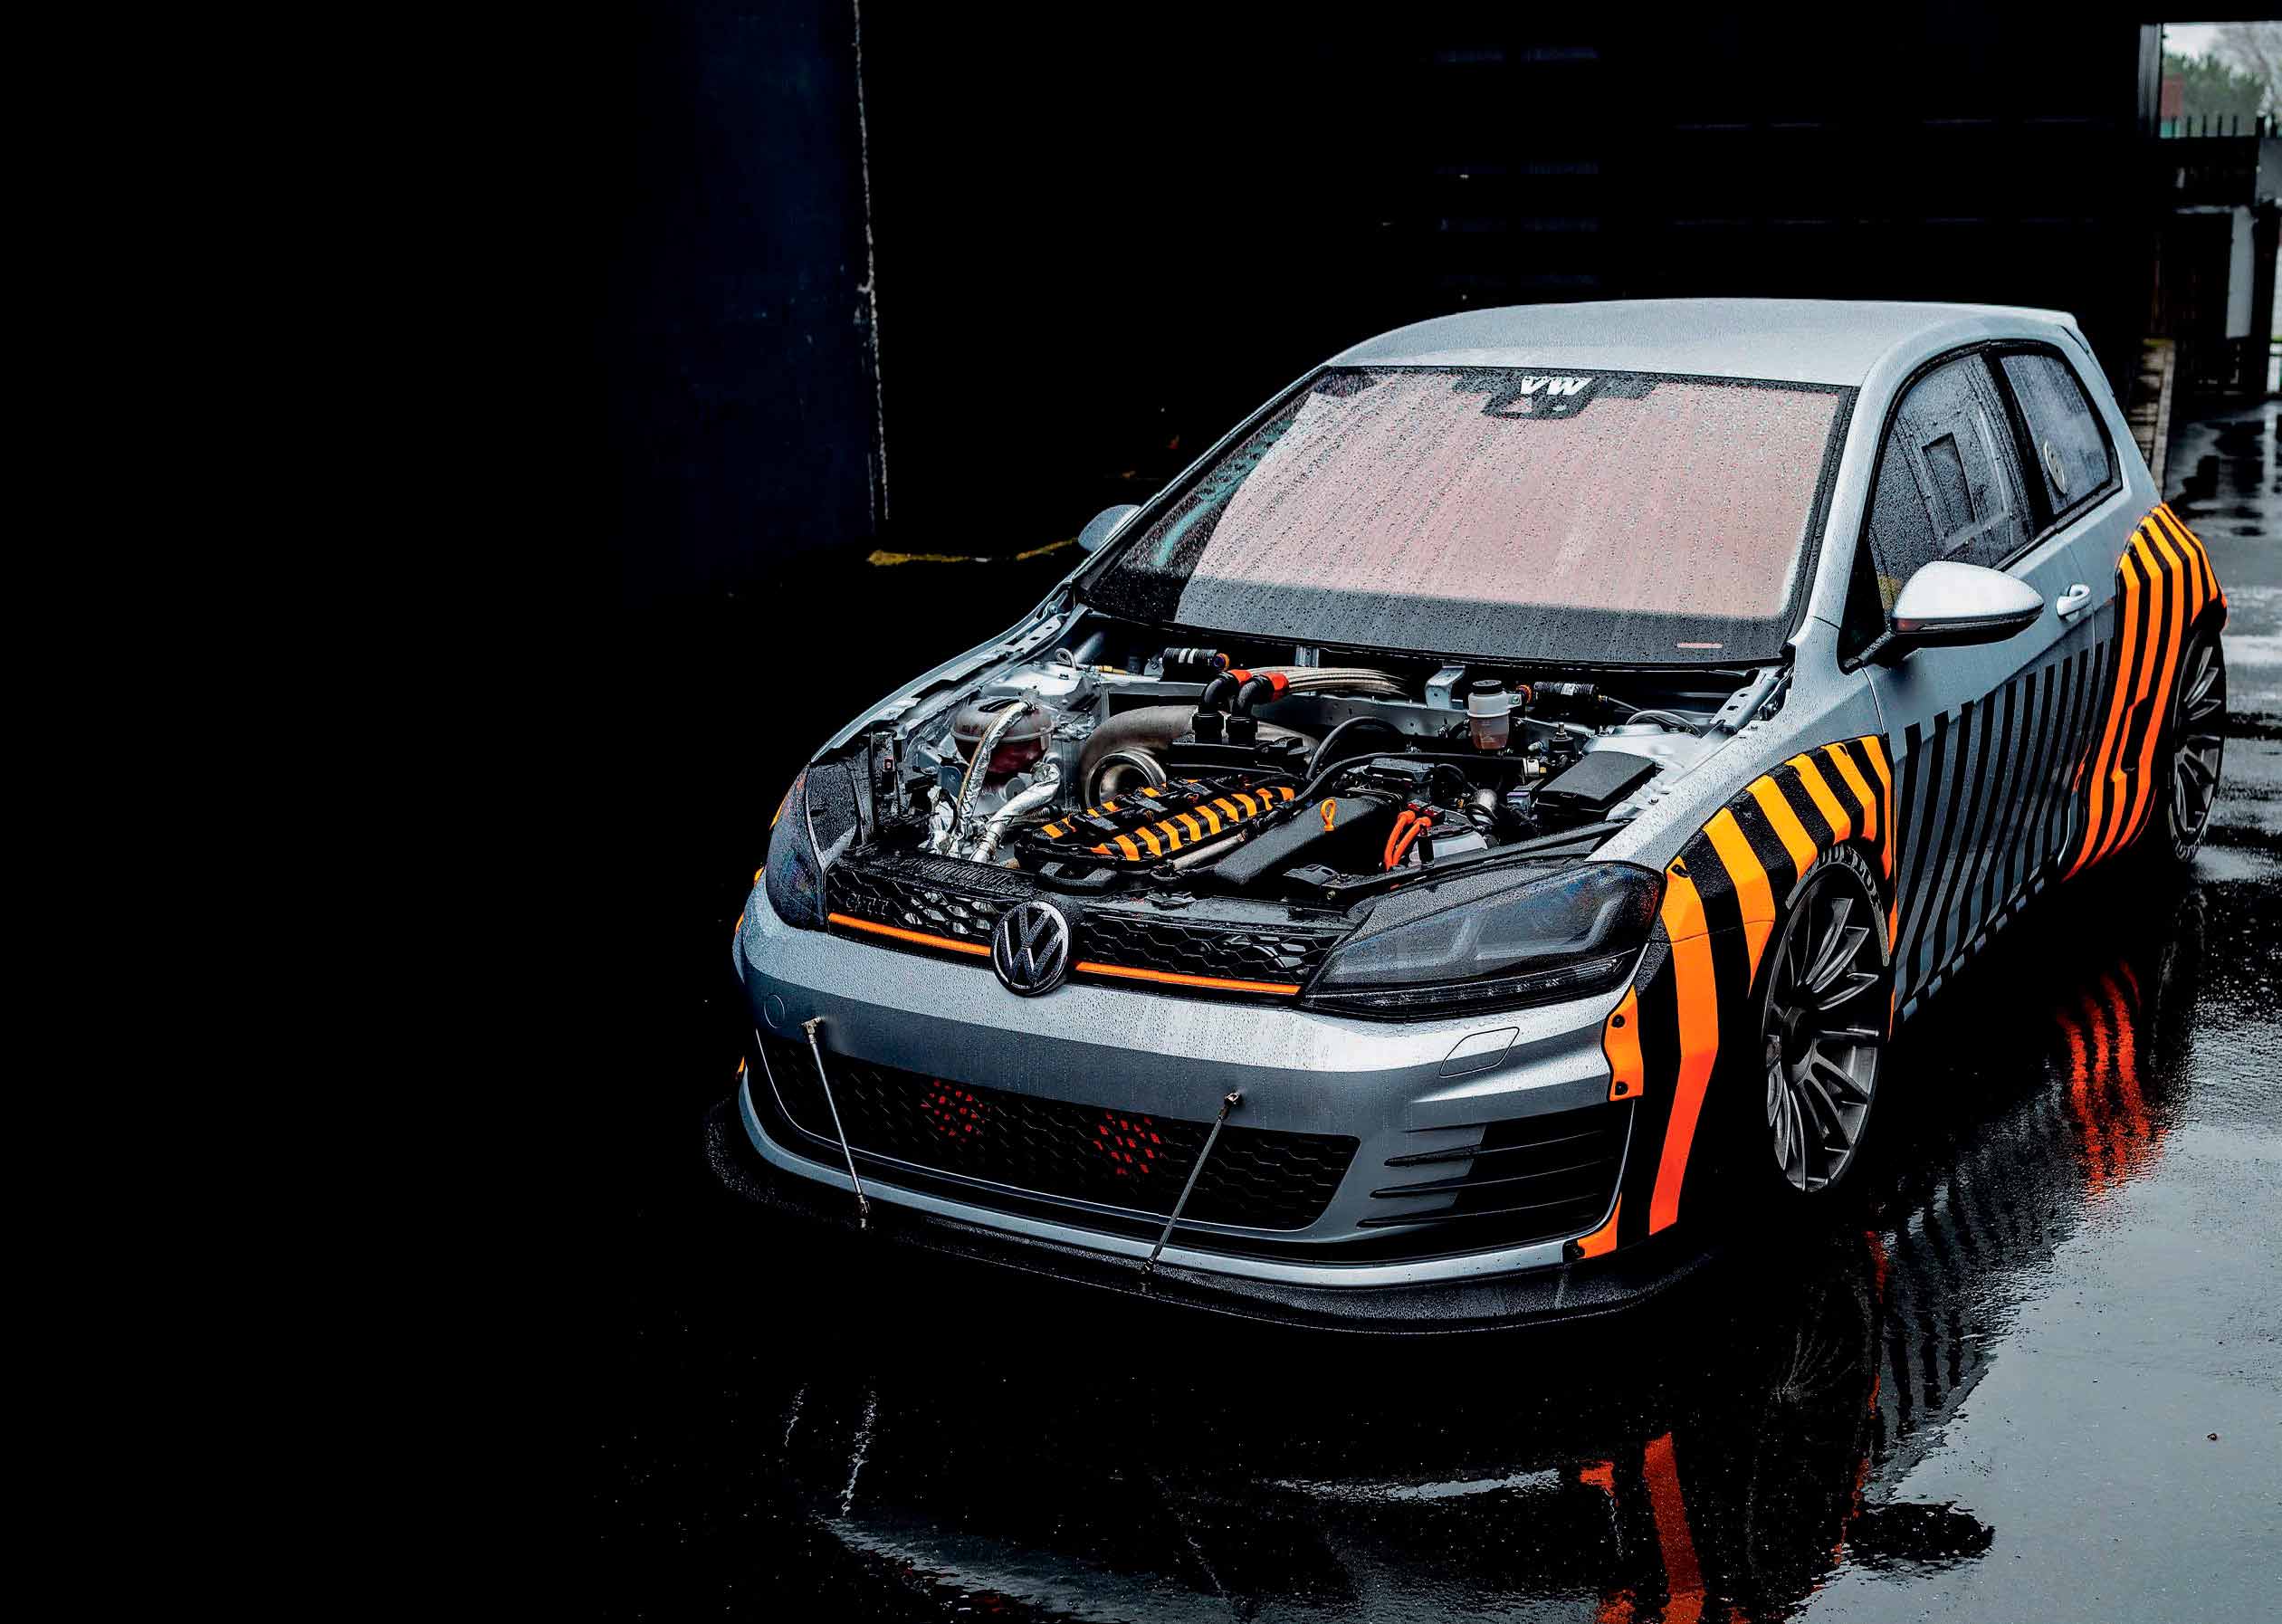 JP Performance build 1000bhp part-electric high-tech Volkswagen